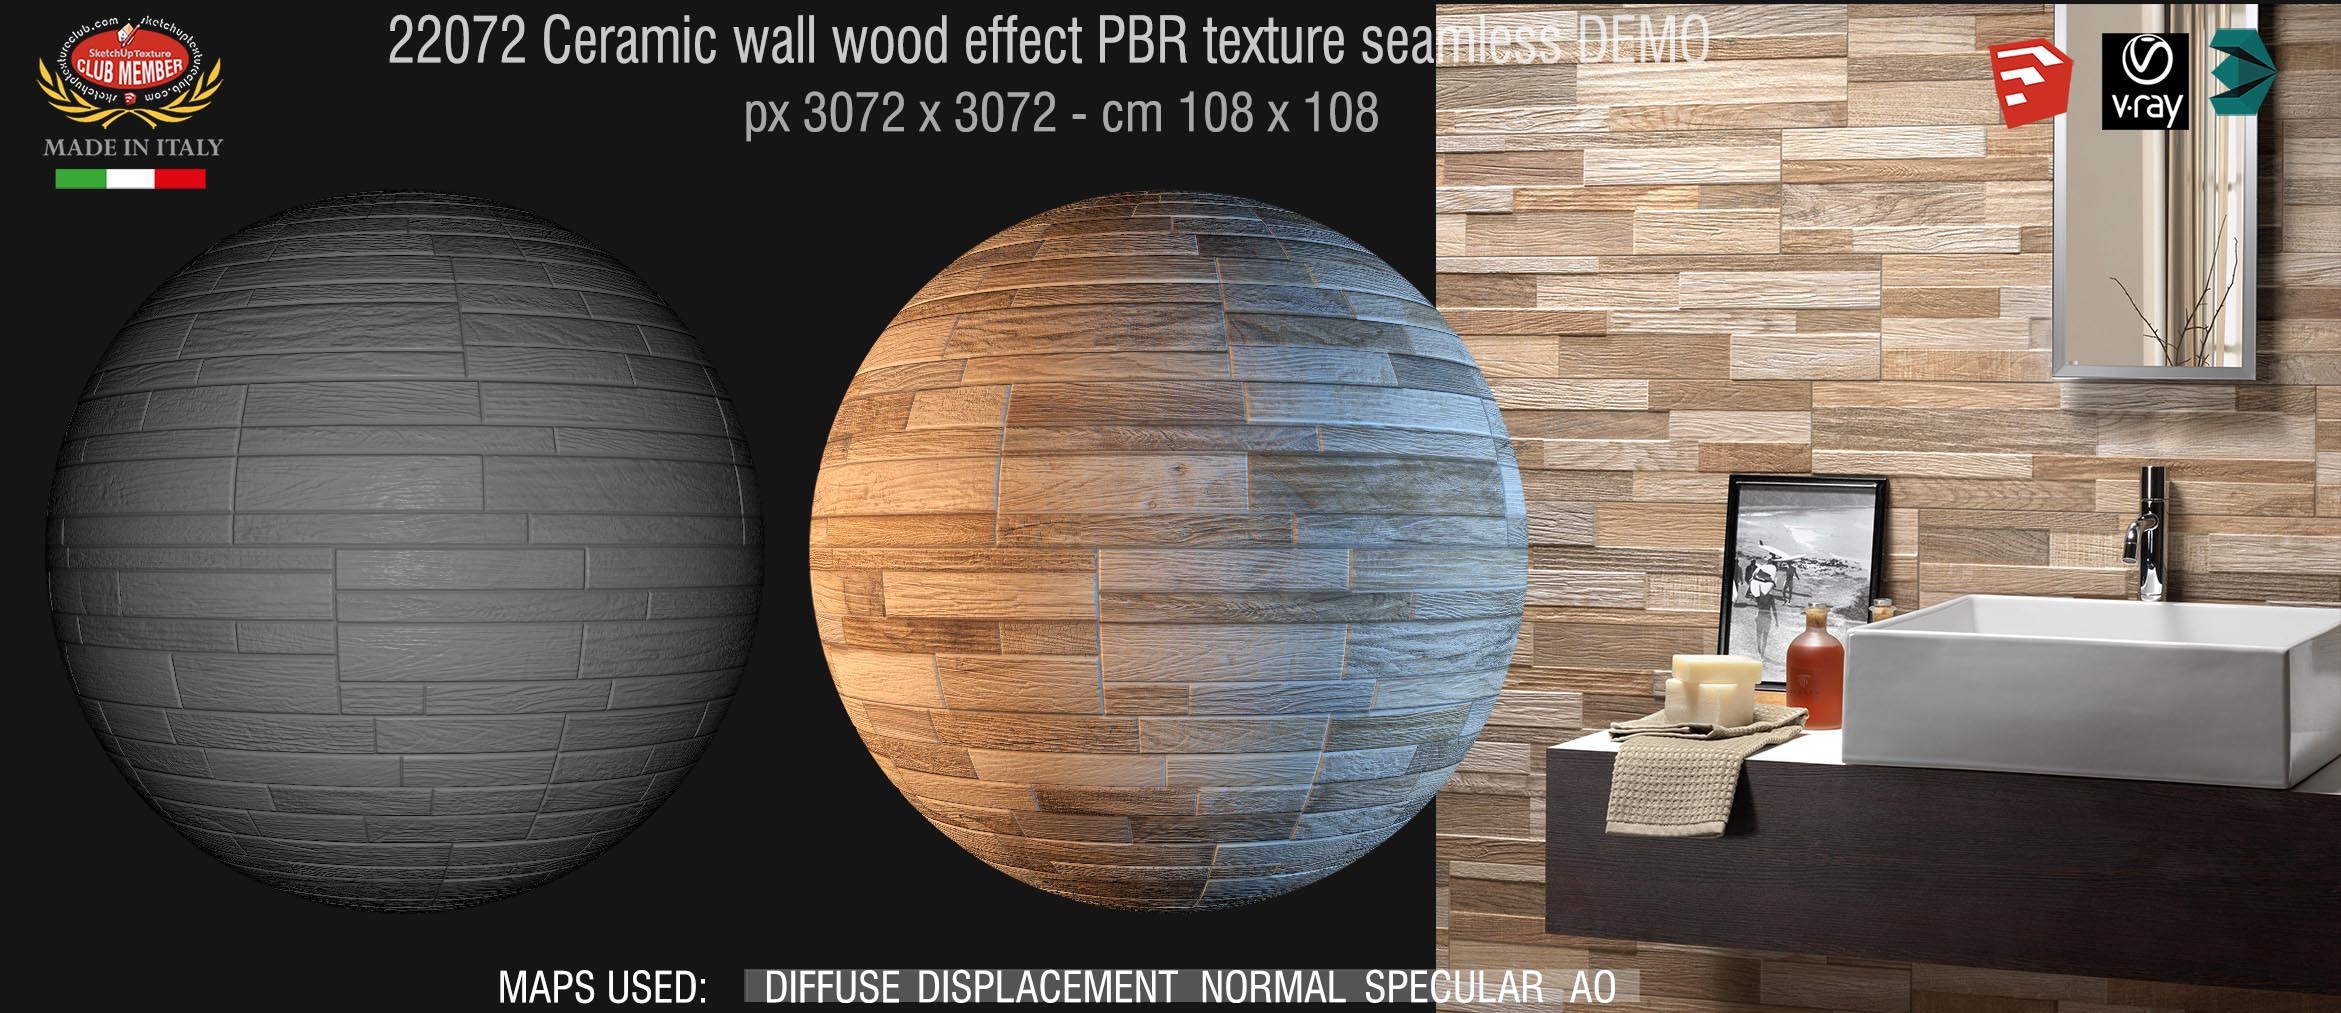 22072 Ceramic wall wood effect PBR texture seamless DEMO